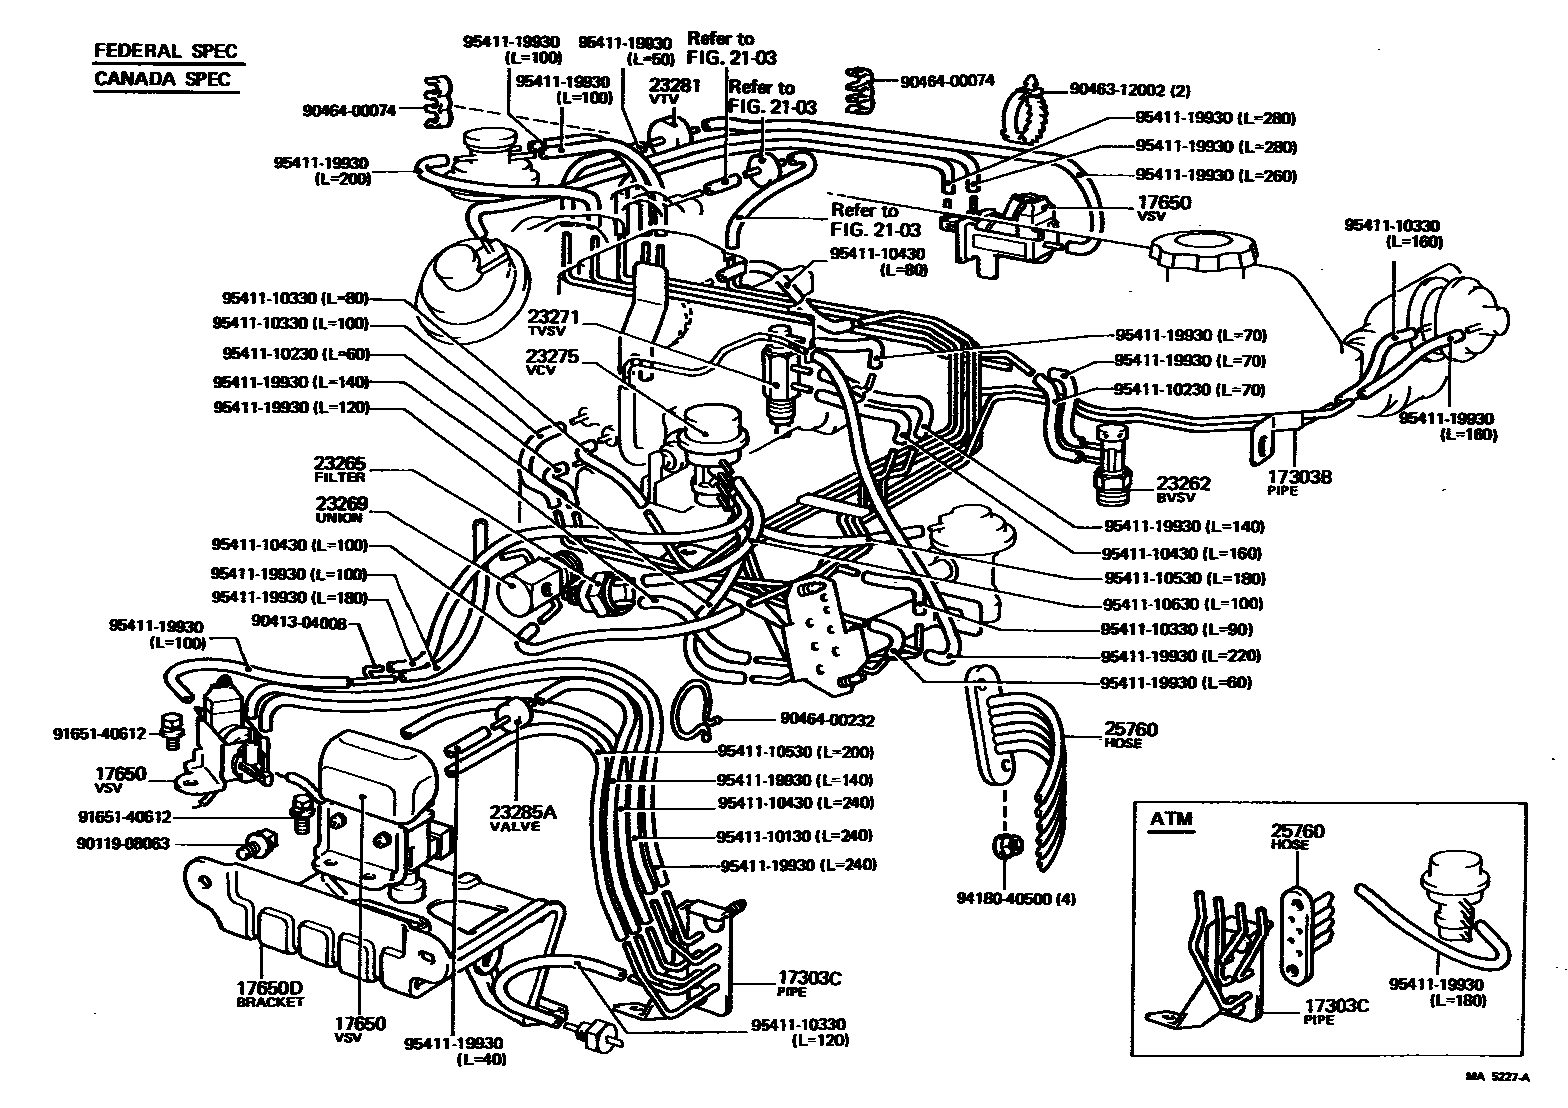 Need a 1981 CA vacuum diagram, FSM download/pic is Ideal ... 1995 lexus gs300 fuse diagram 